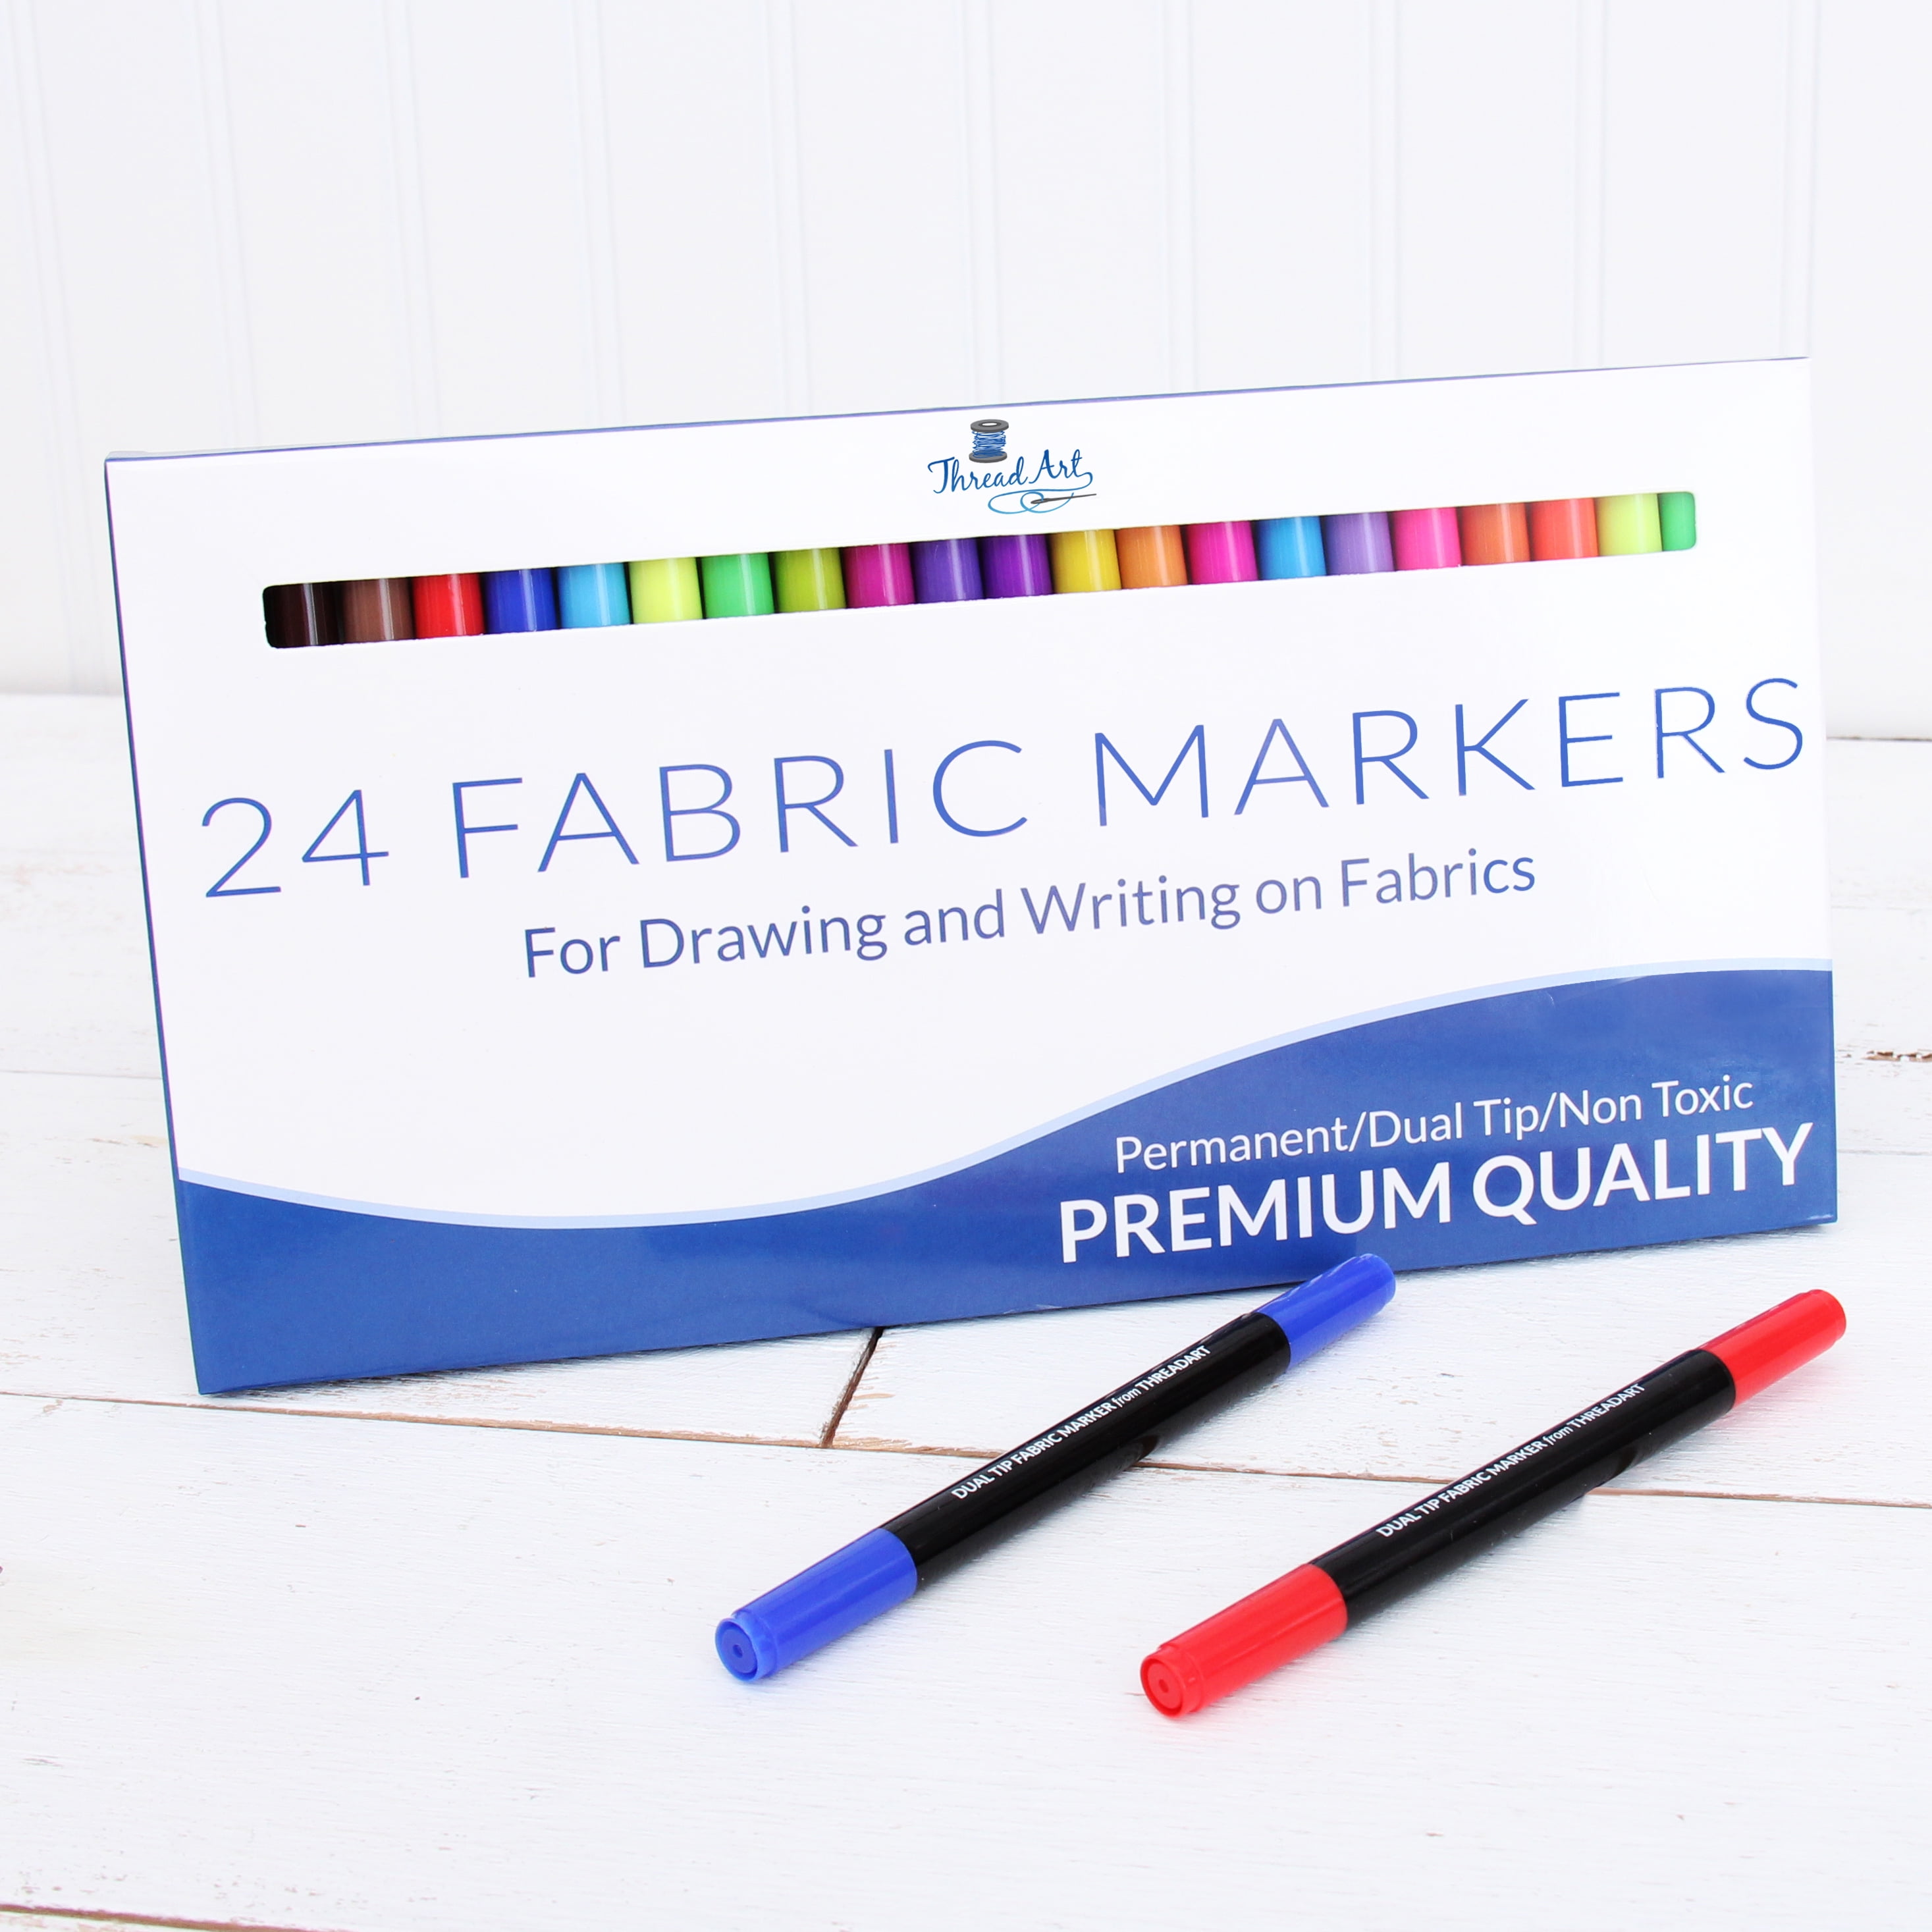 Royal Brush® Azure™ Professional Artist Alcohol Markers - 80-Piece Set